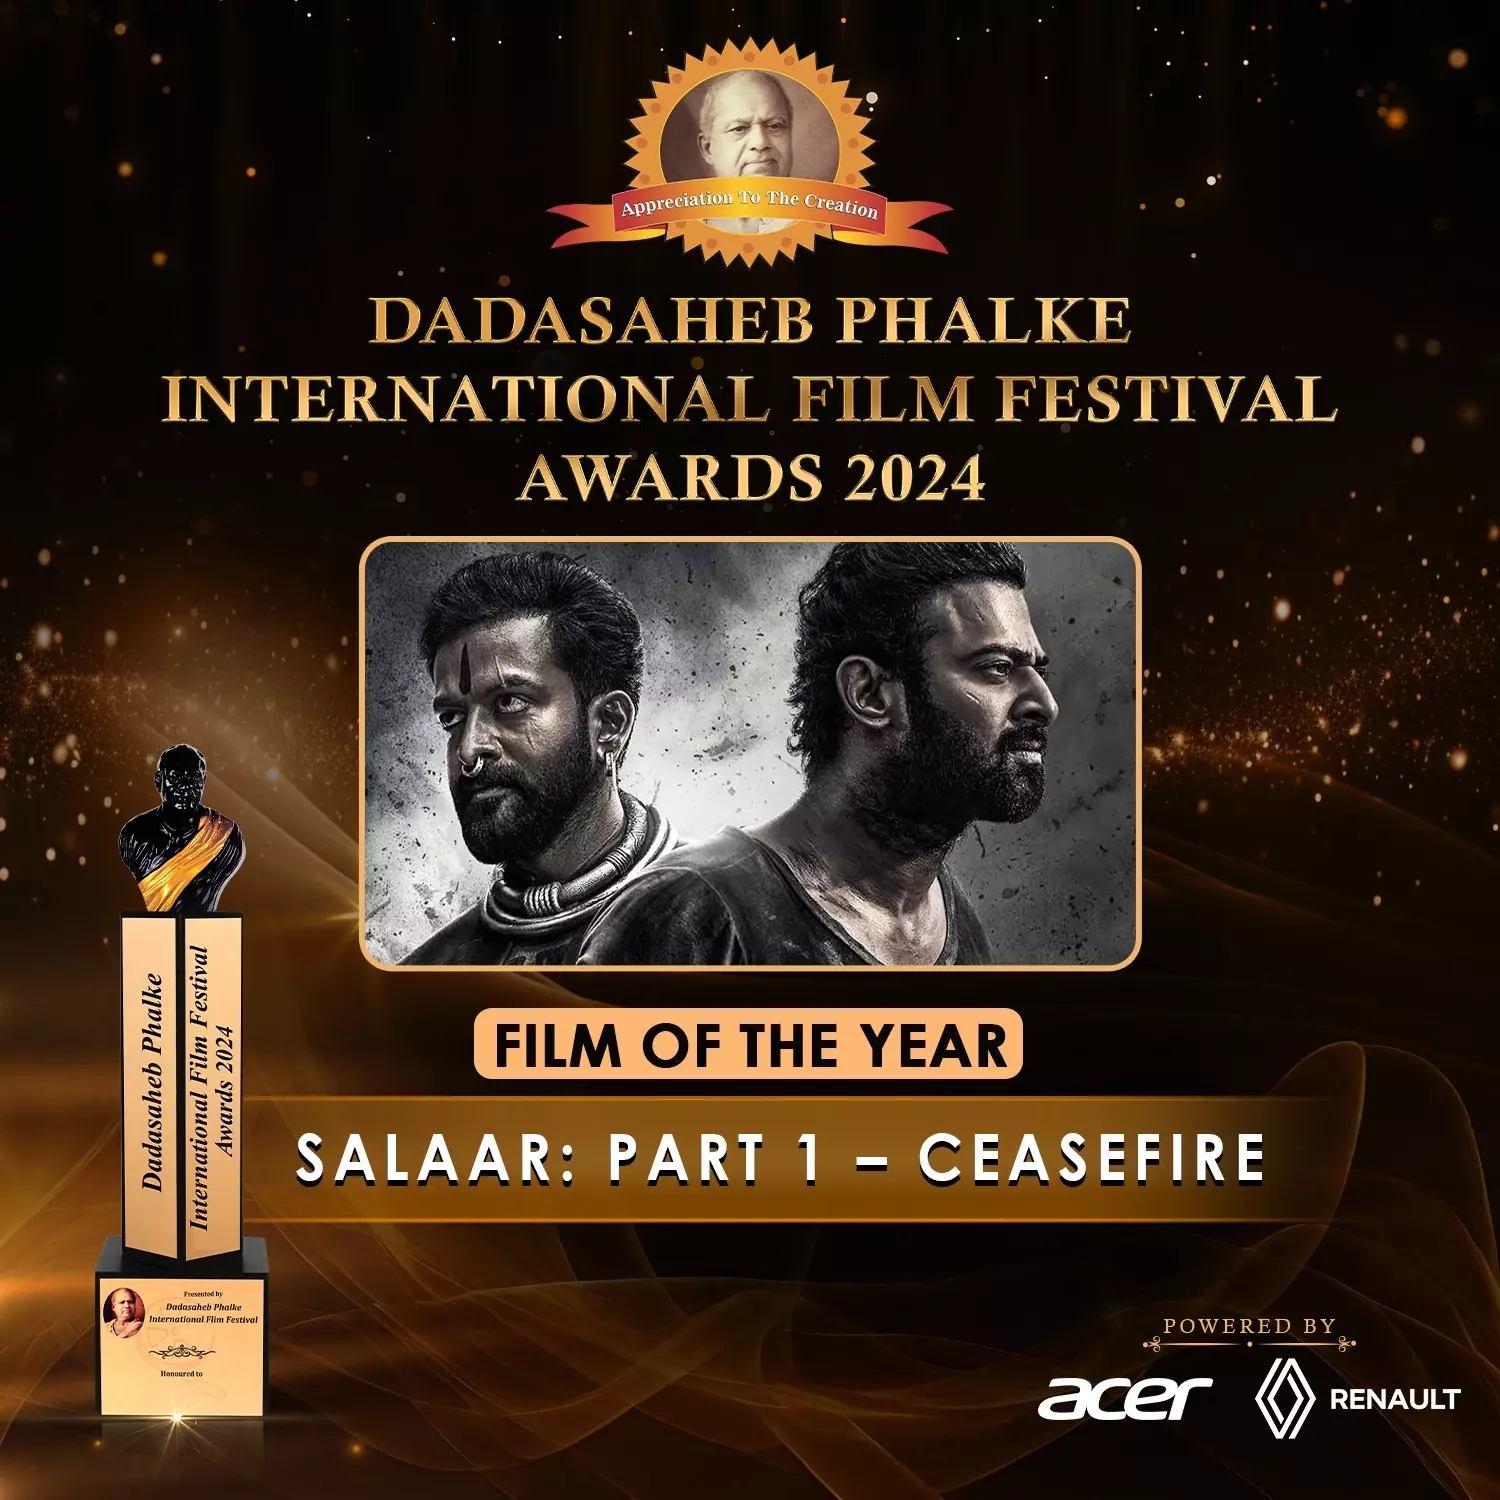 Salaar pockets coveted Dadasaheb Phalke Award